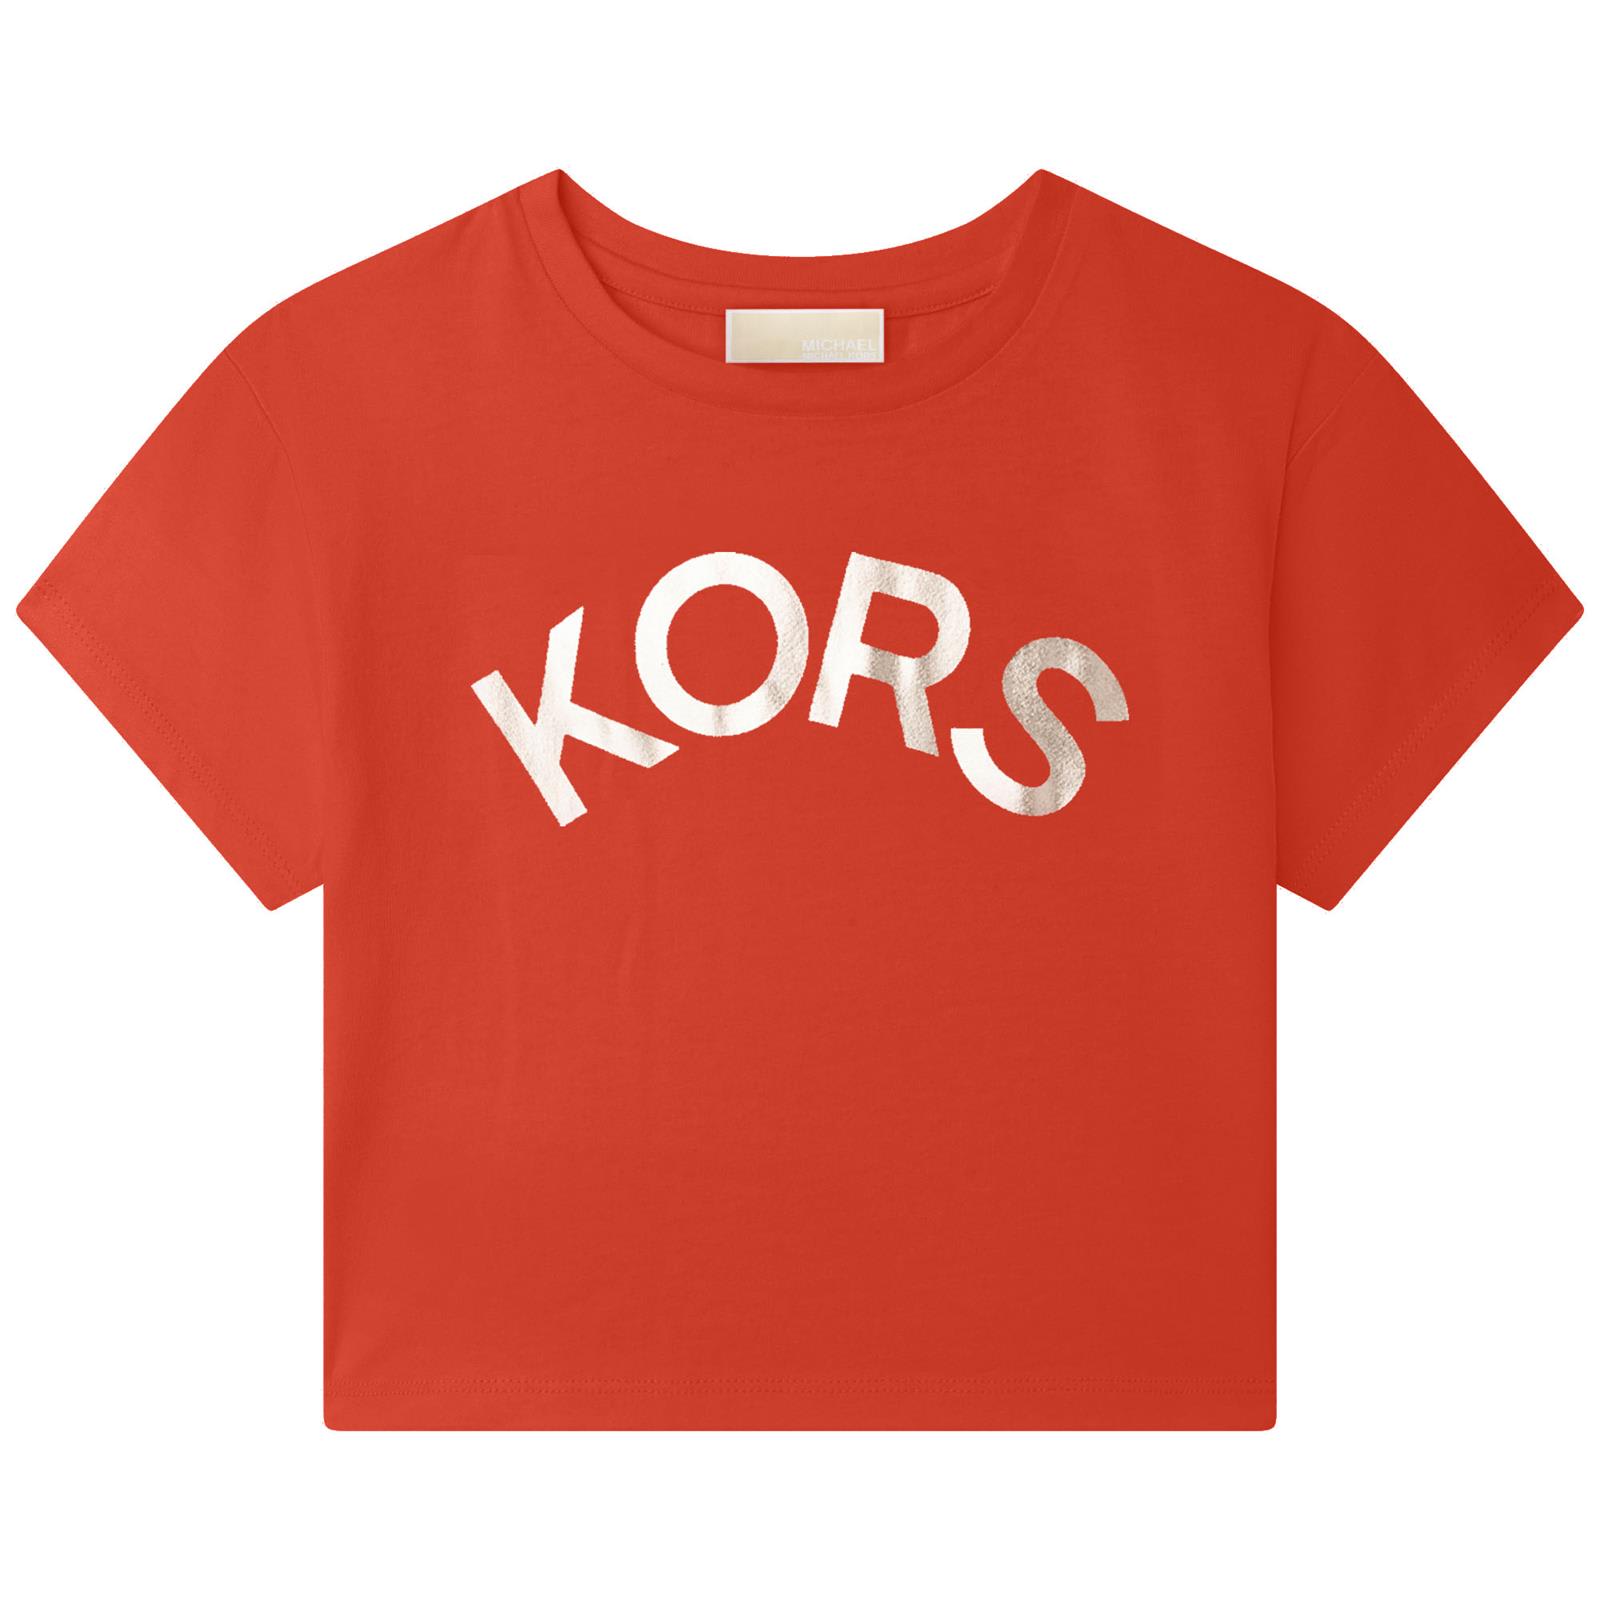 Michael Kors Printed T-shirt